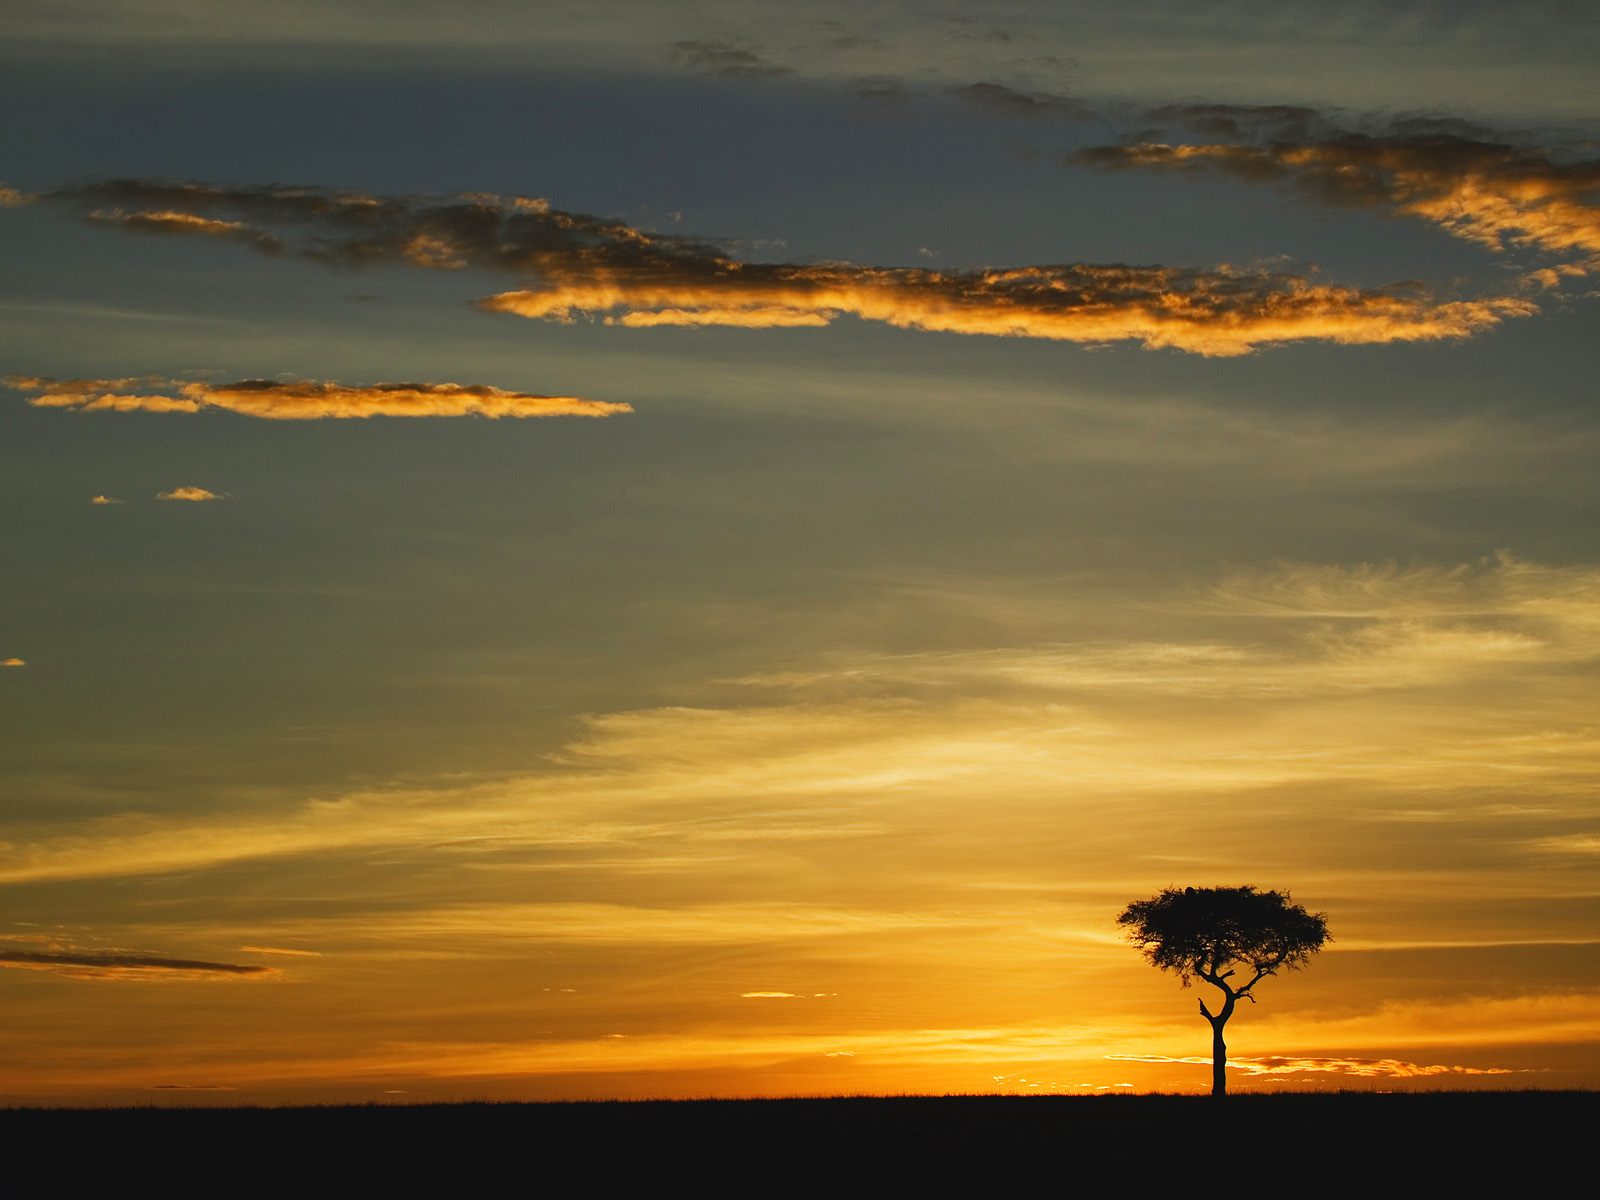 Single acacia tree at sunrise masai mara kenya africa desktop wallpapers x